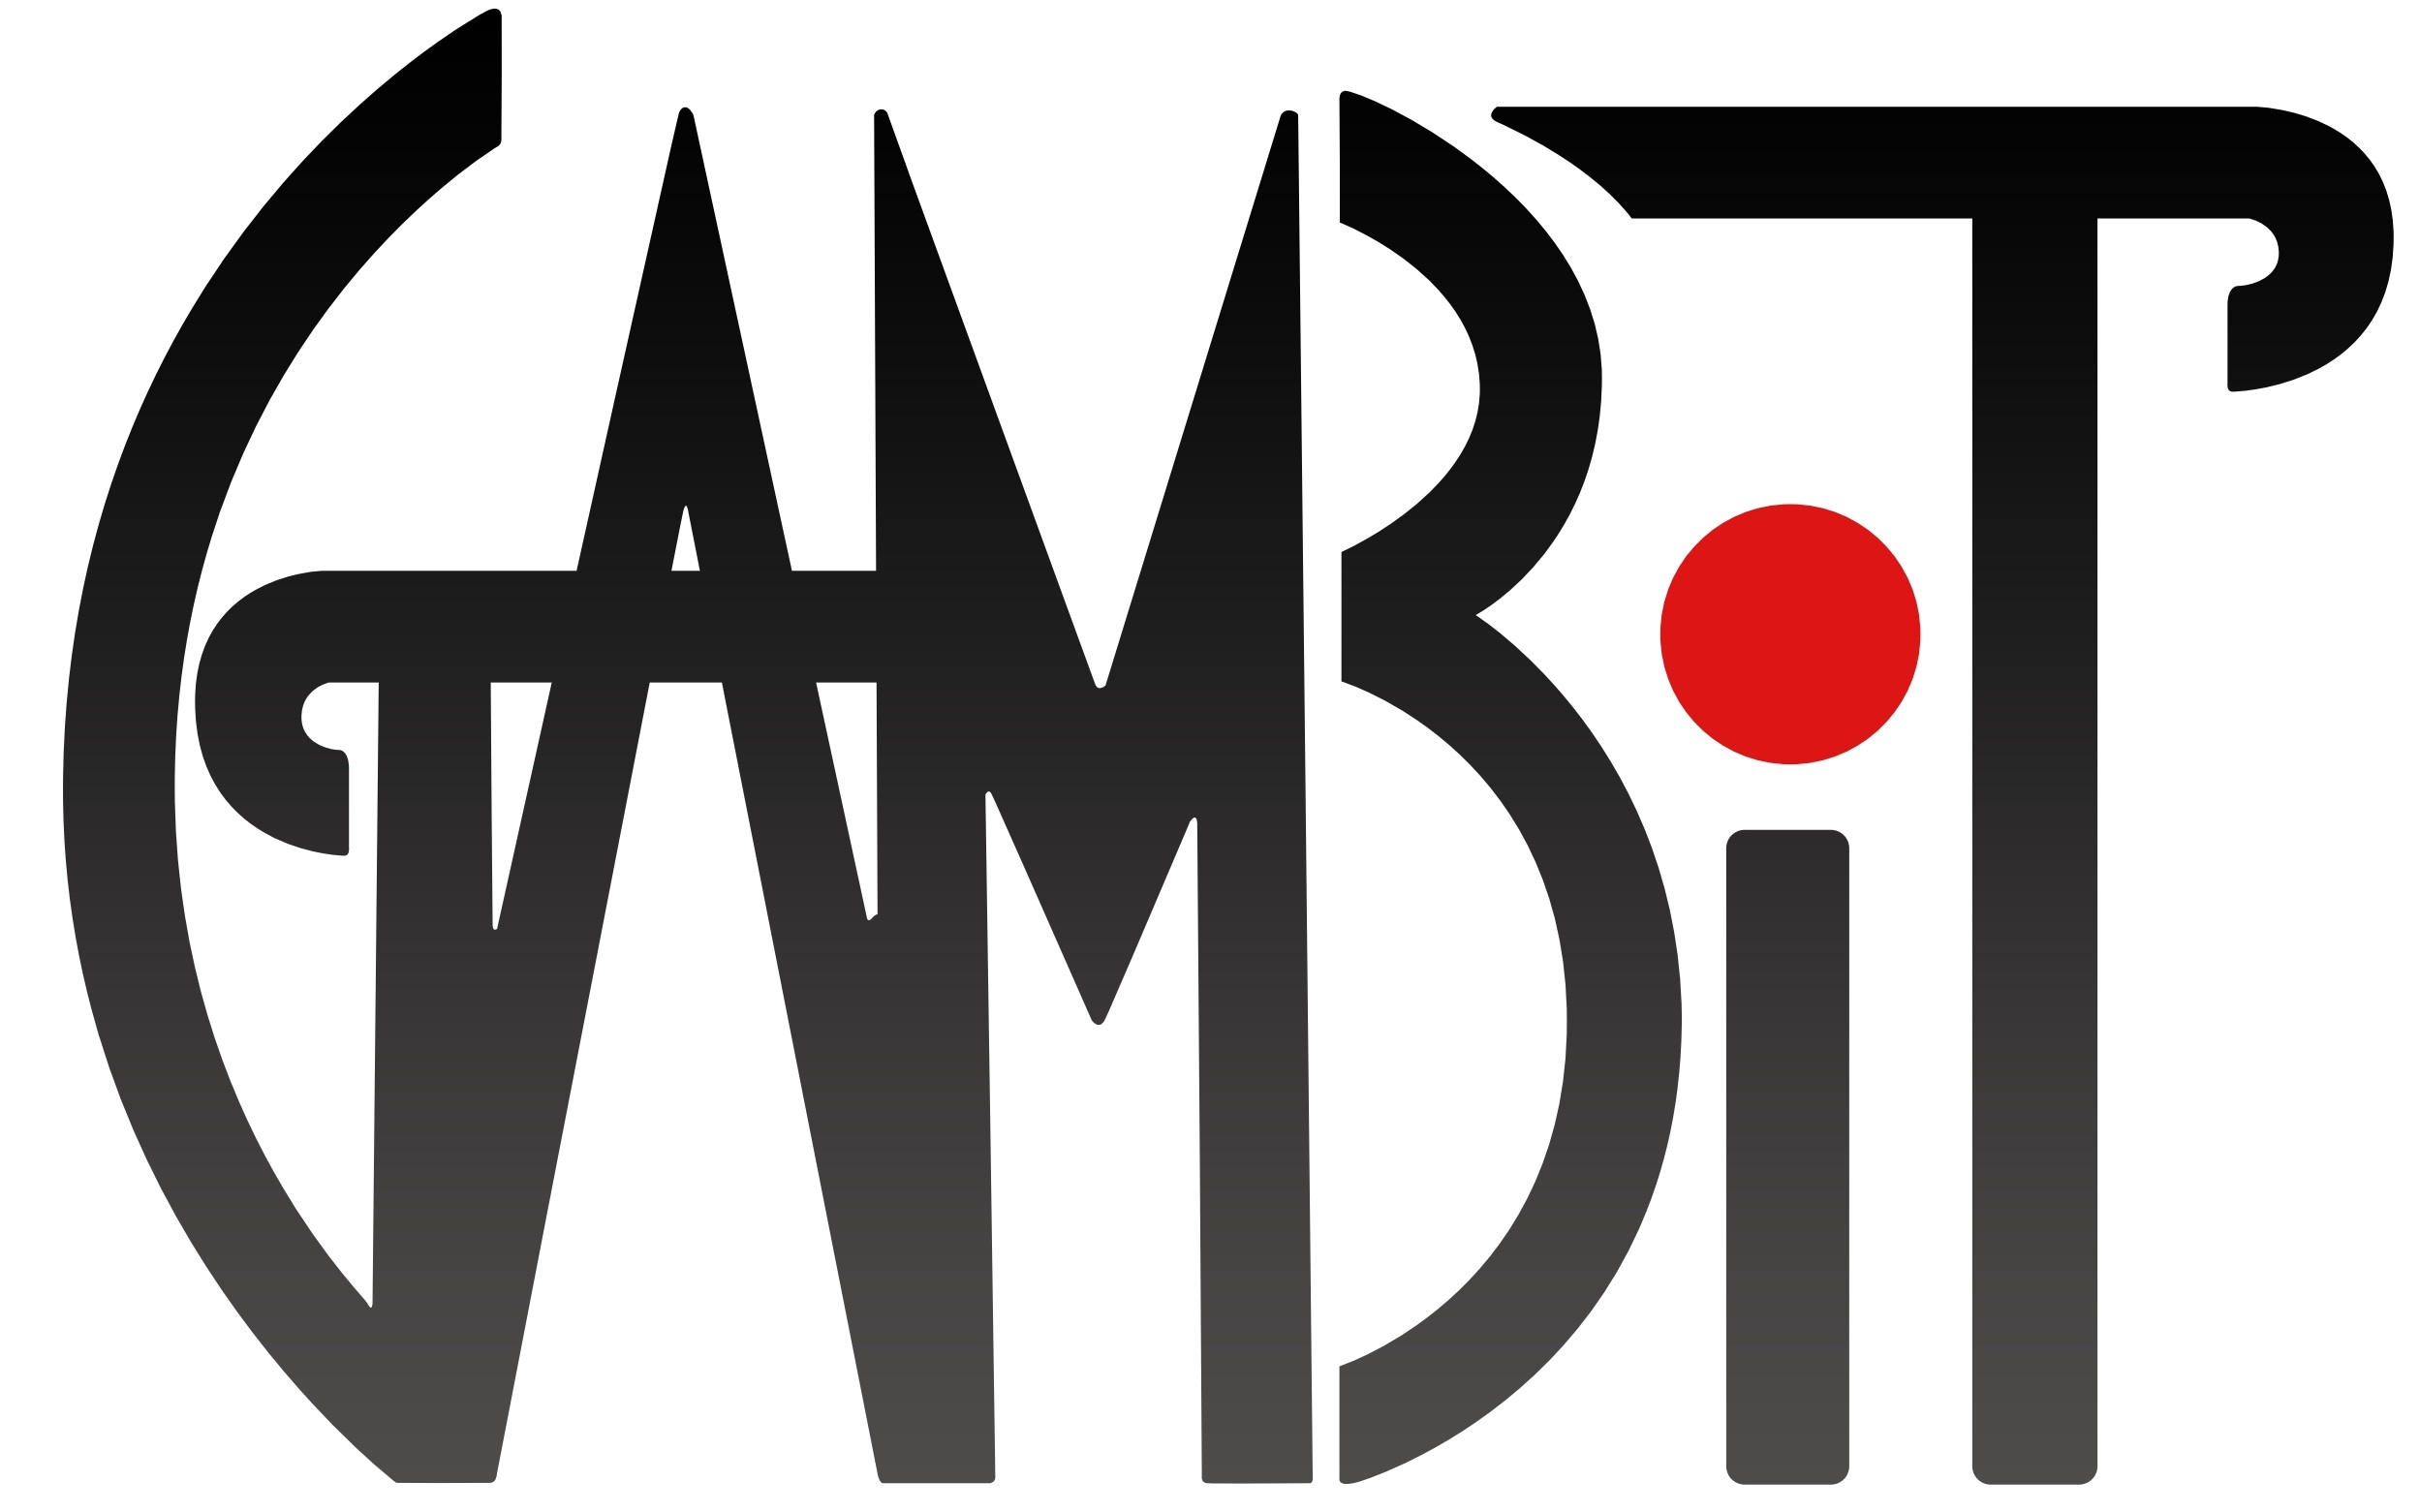 GAMBIT Logo.jpg ce26206adffee3f0d1113dba1cee6f6e